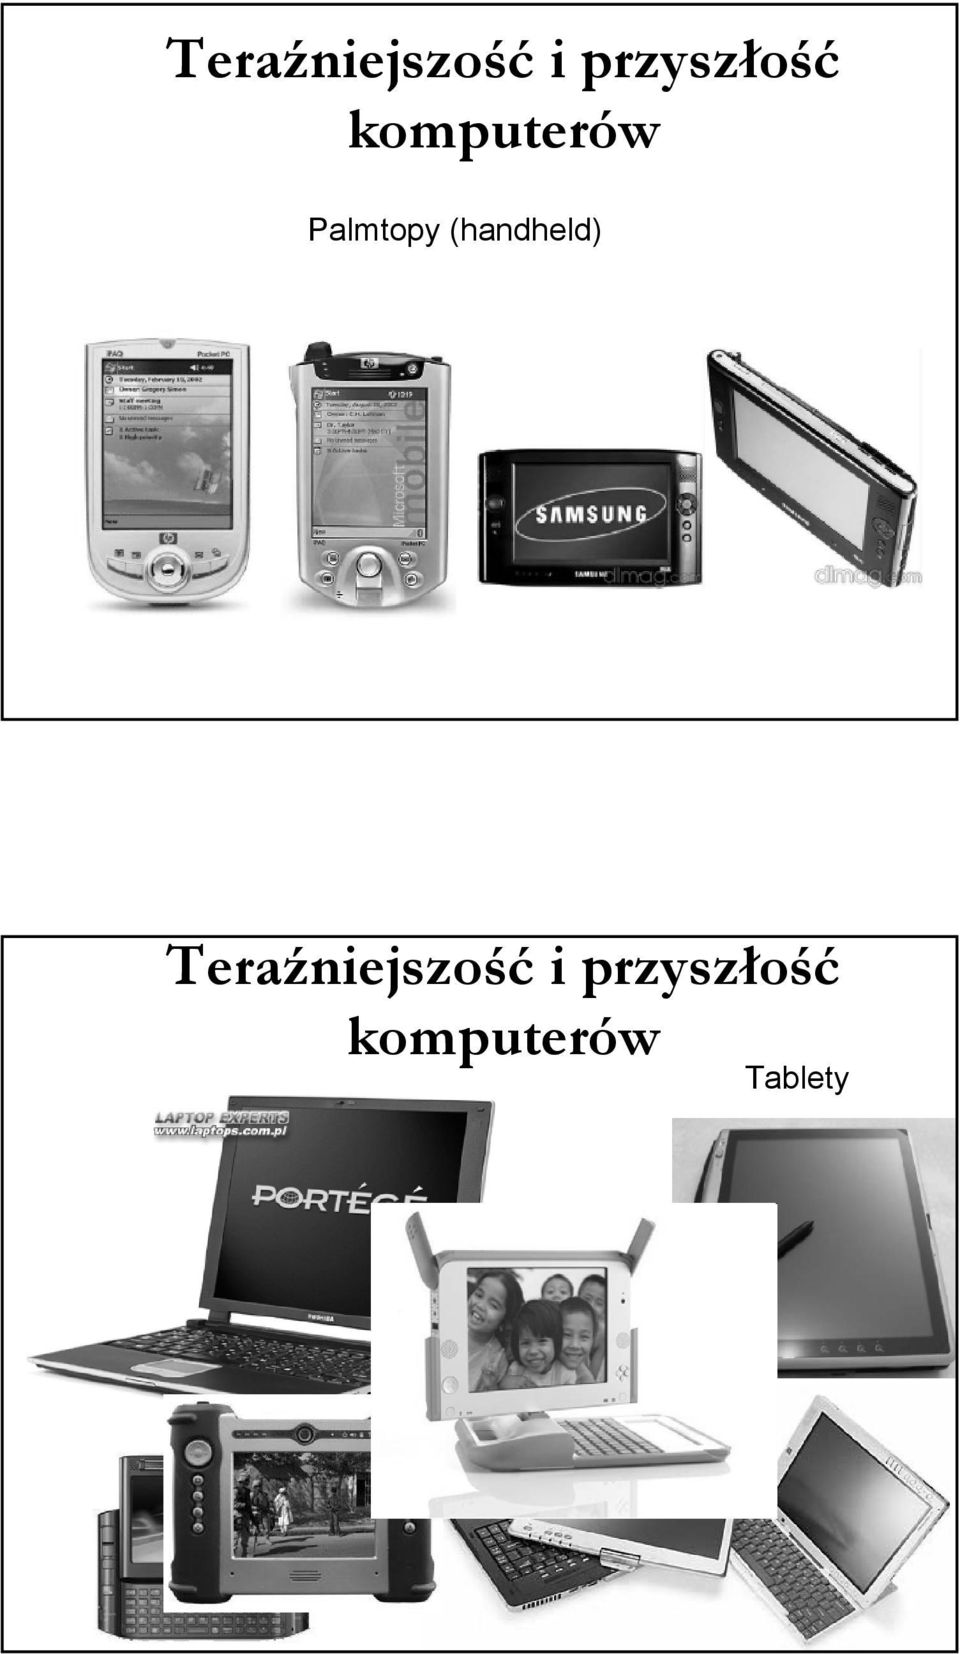 Palmtopy (handheld)  